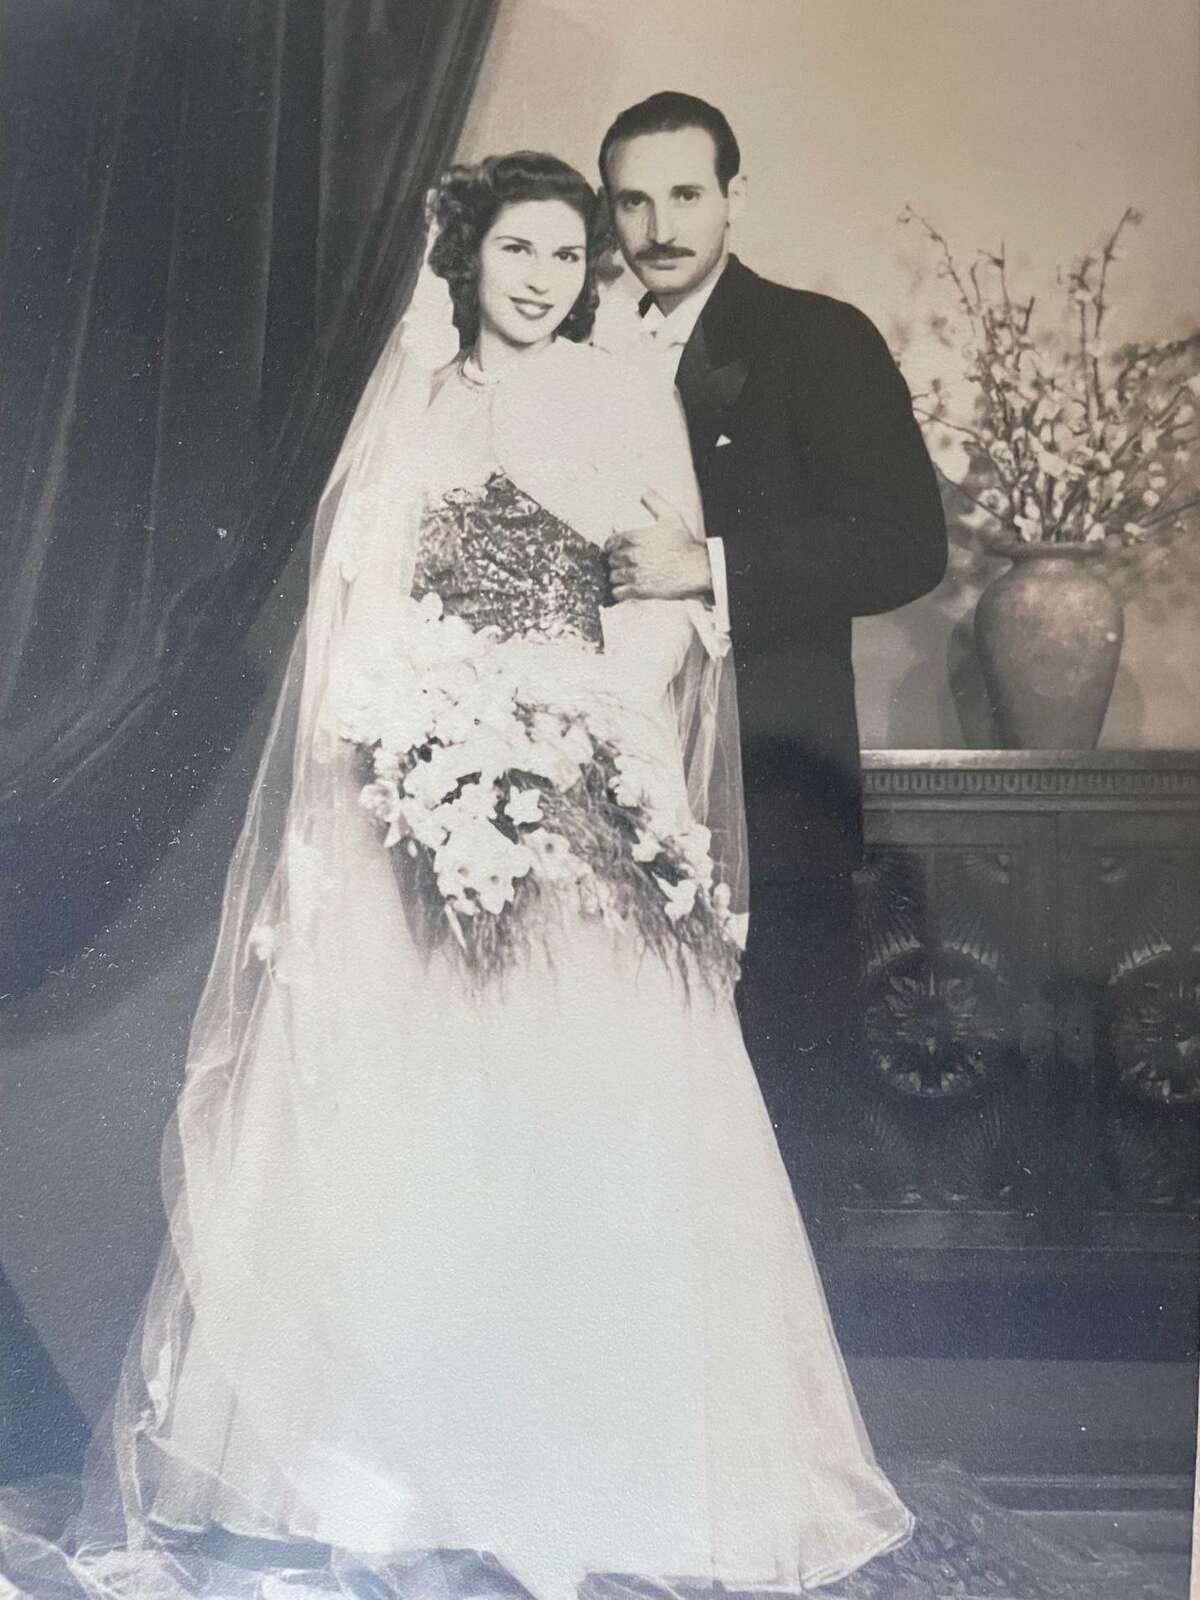 Deena Emera’s grandparents were married in 1952.